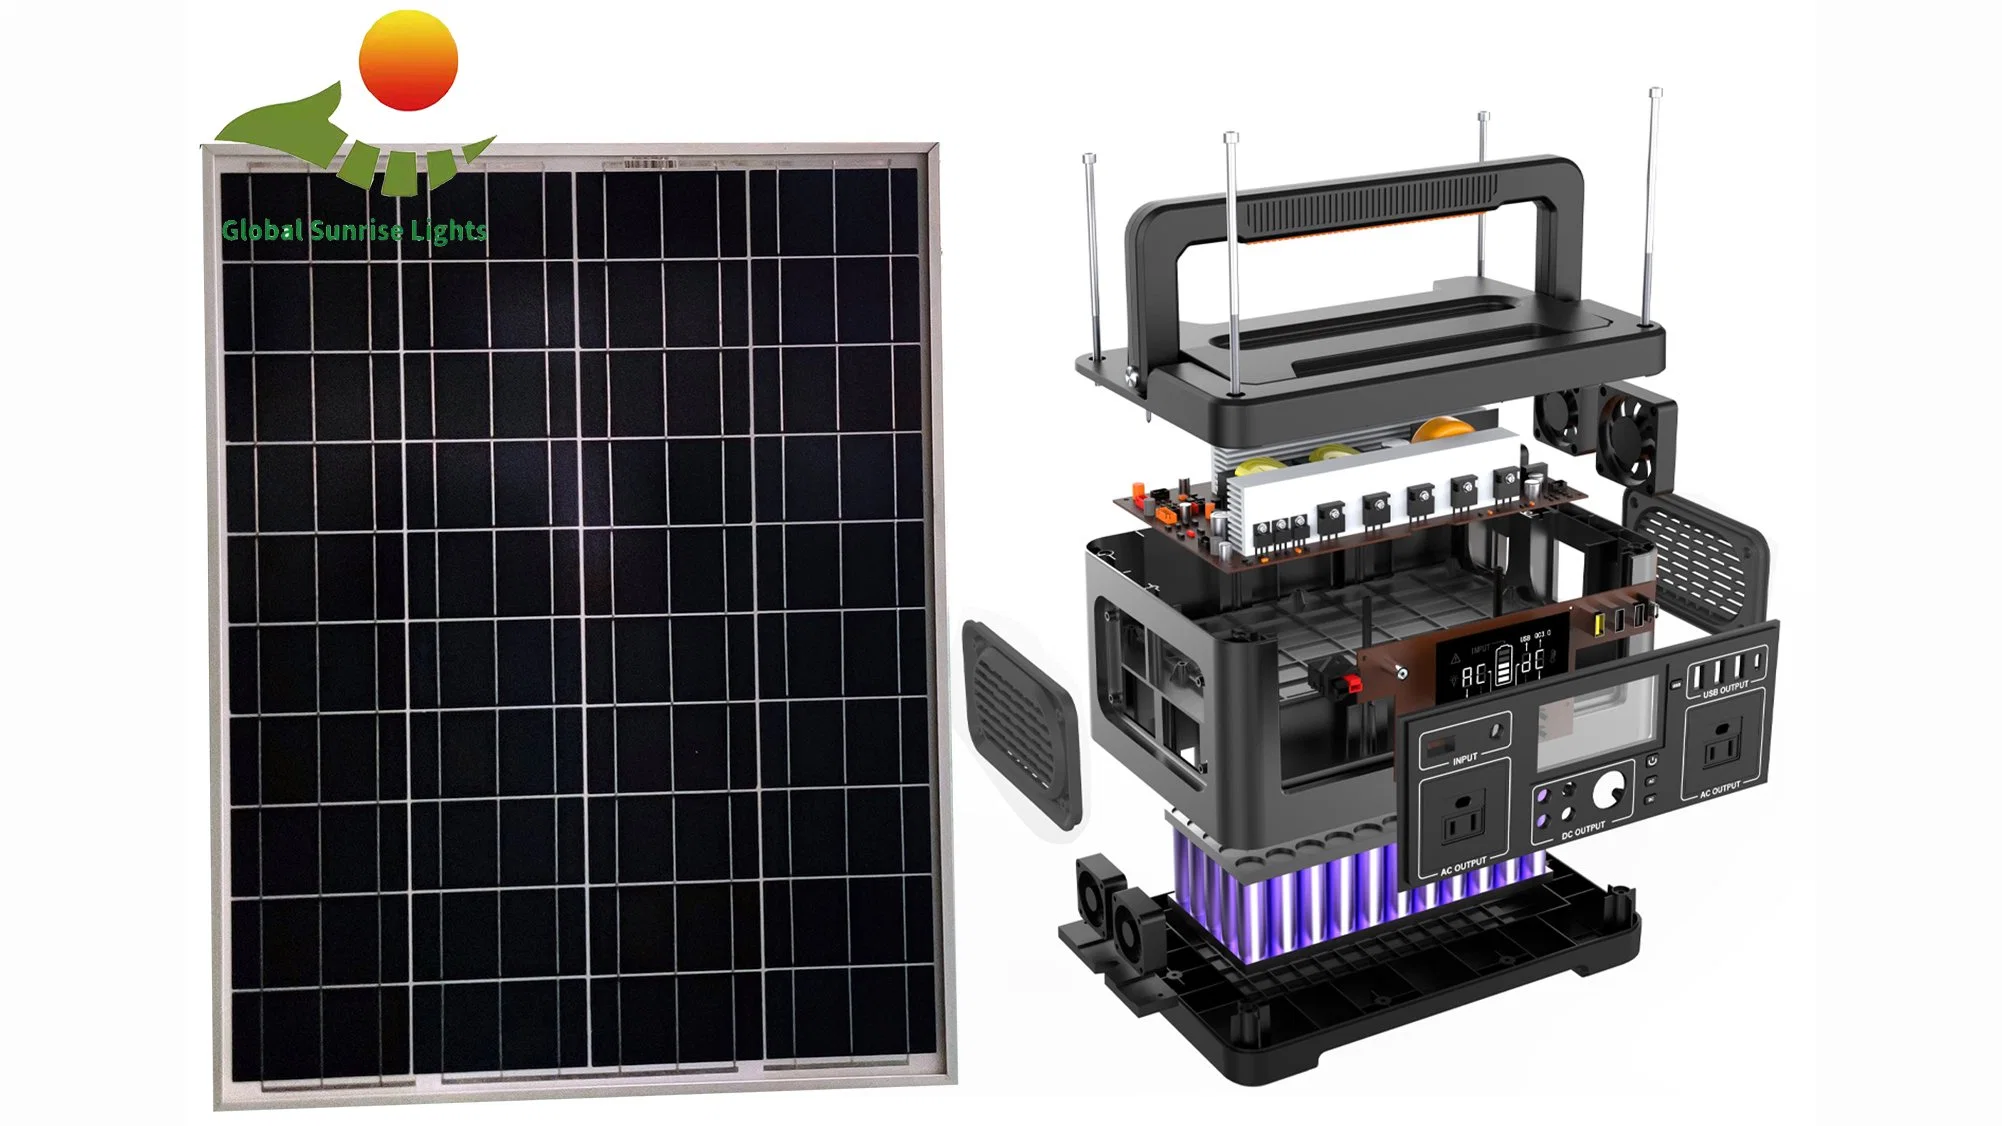 Solar Gadget Solar Kit Portable Power Station 500W LED Bulb Light USB Solar Home Energy Lighting System with Mobile Charger